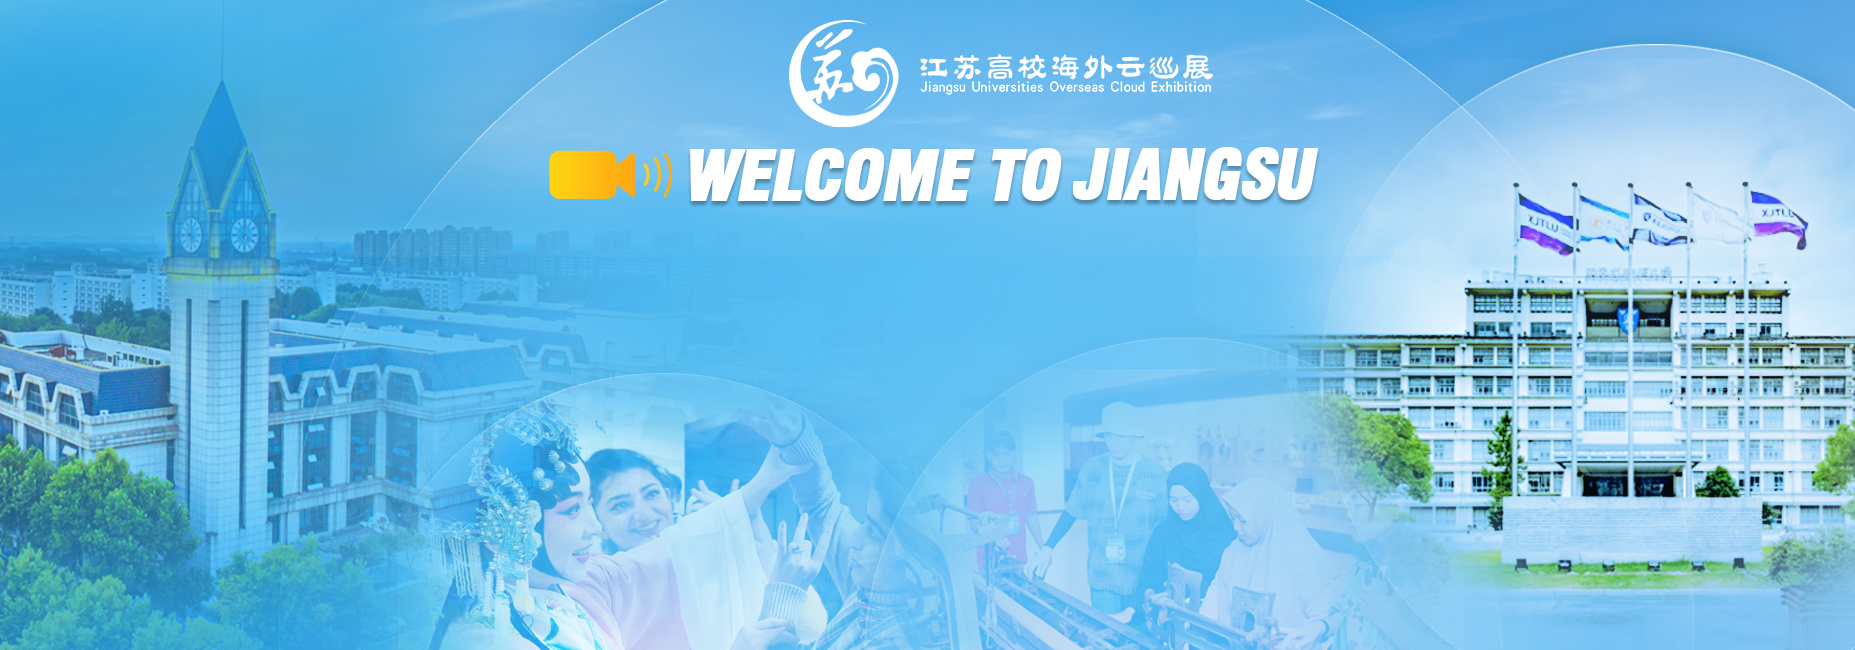 Jiangsu Universities Overseas Cloud Exhibition